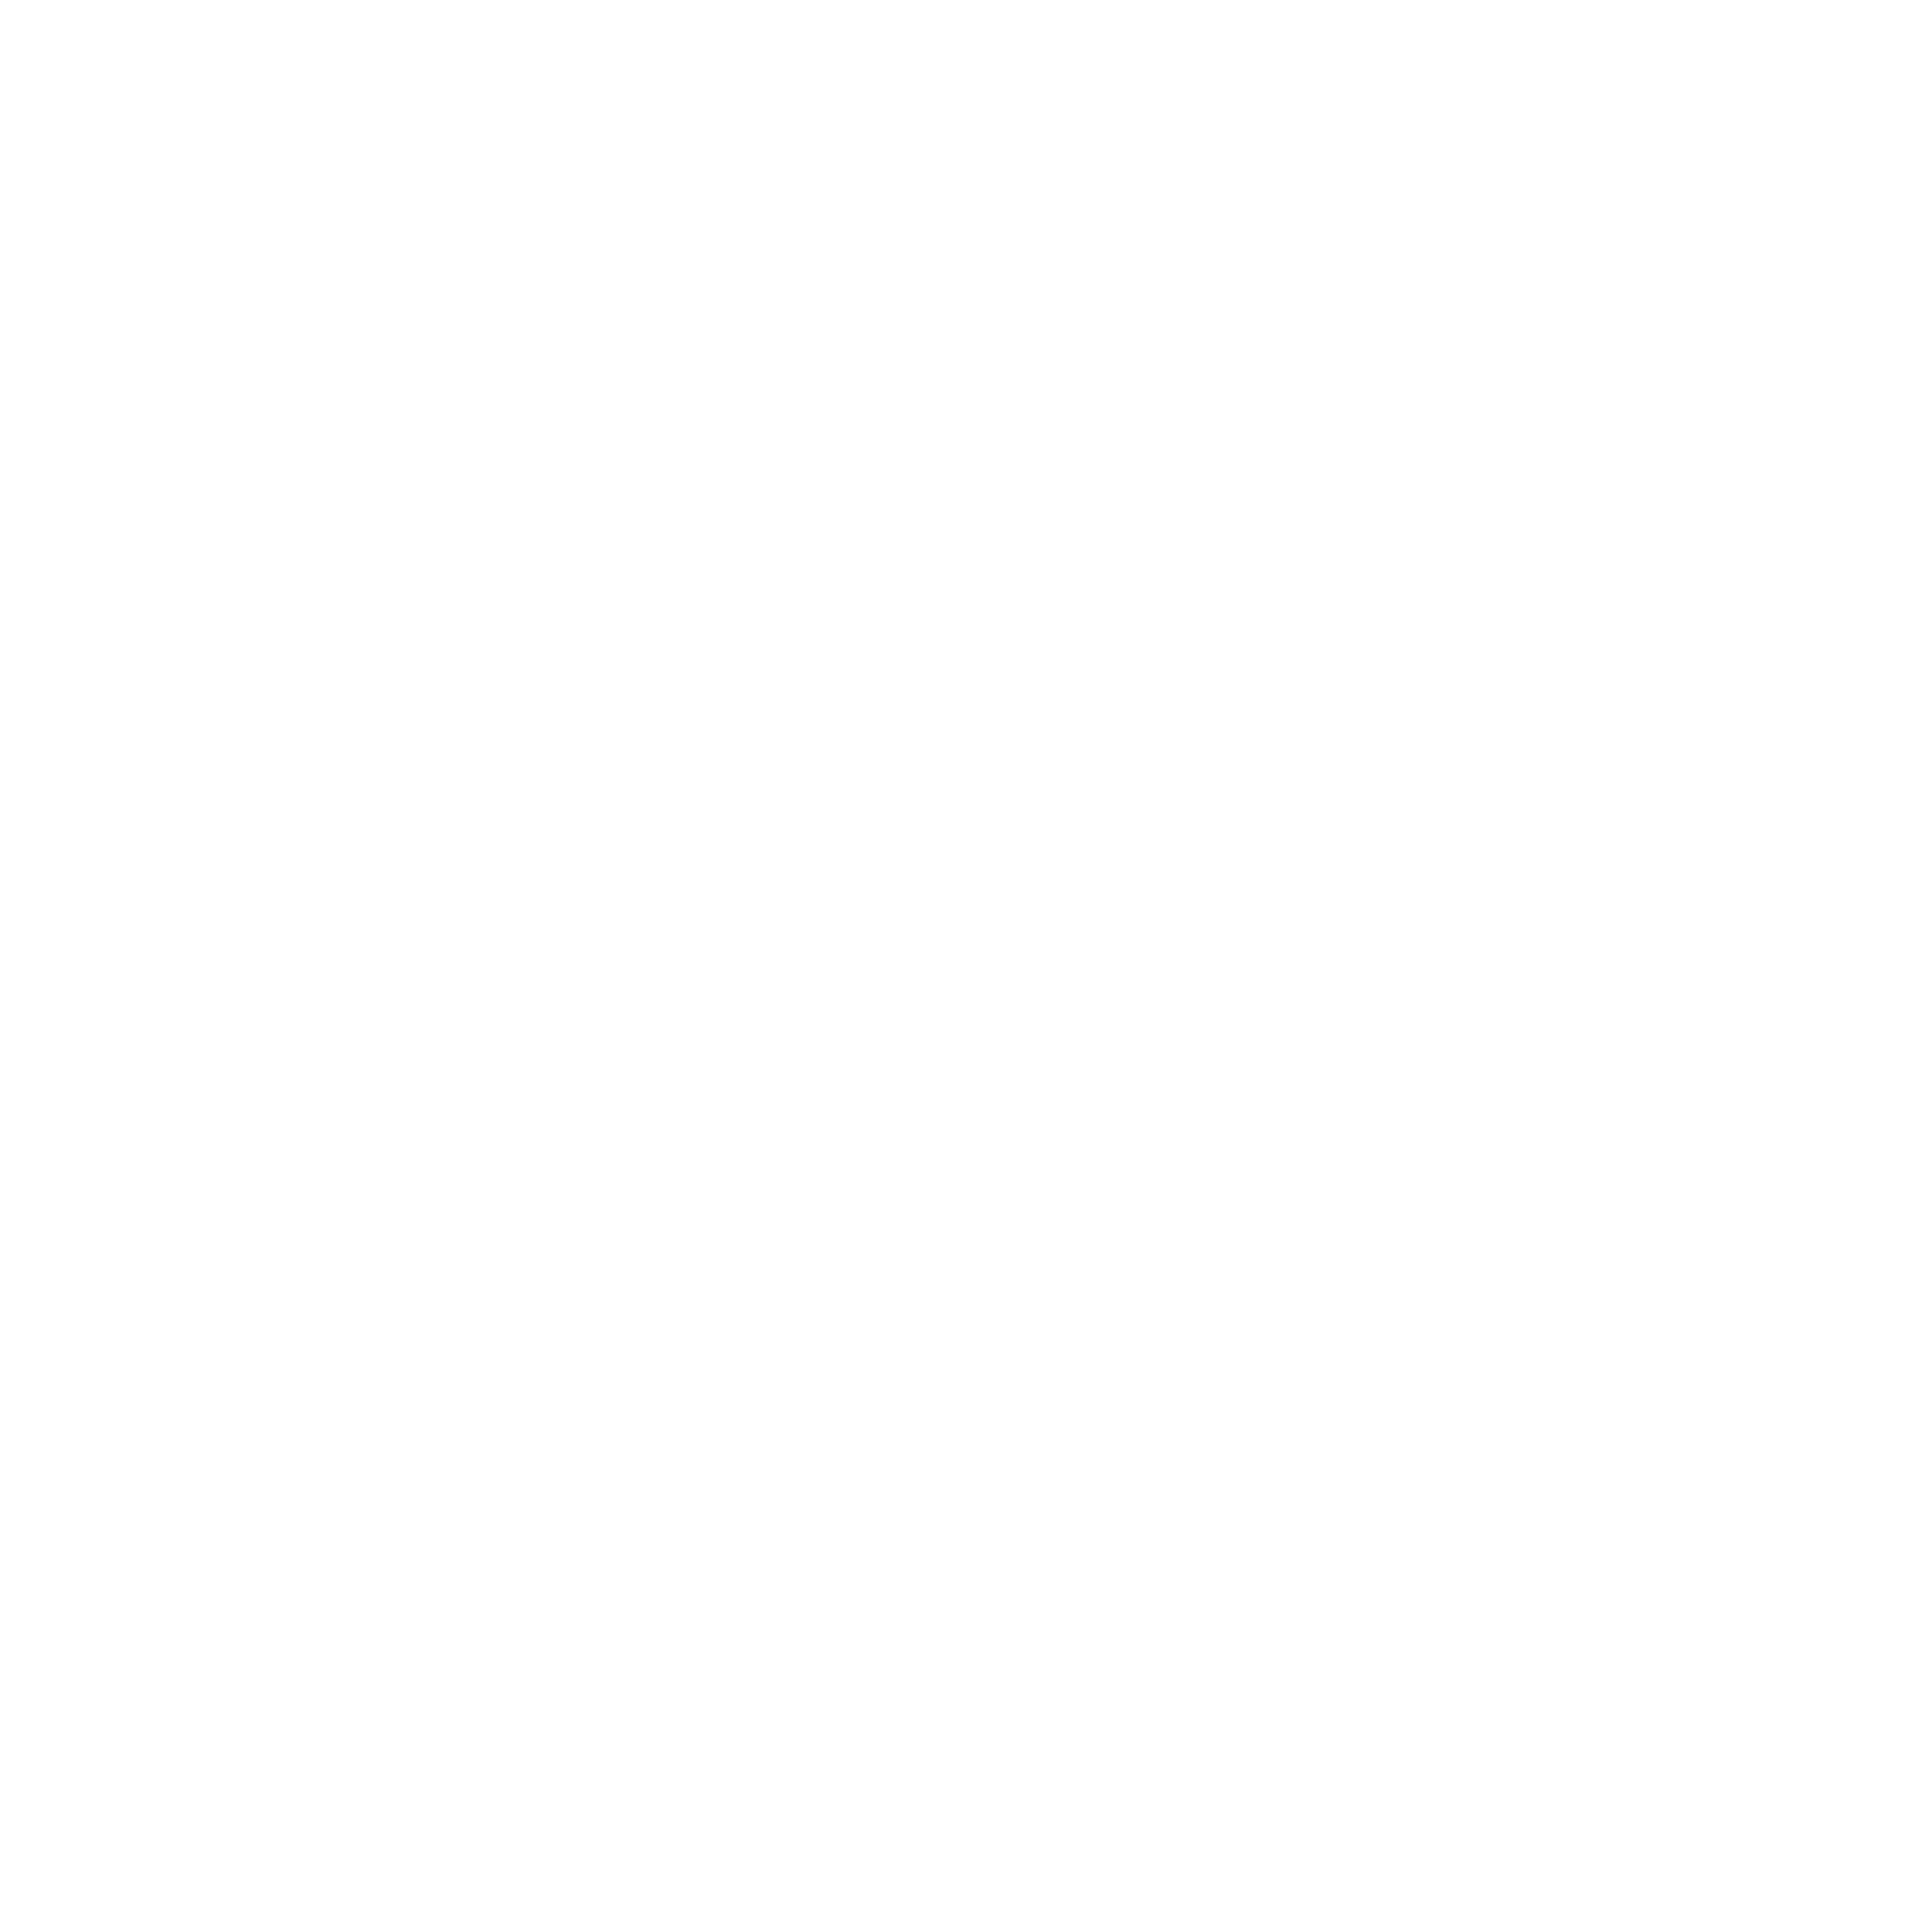 Paulo Filpe Portfolio